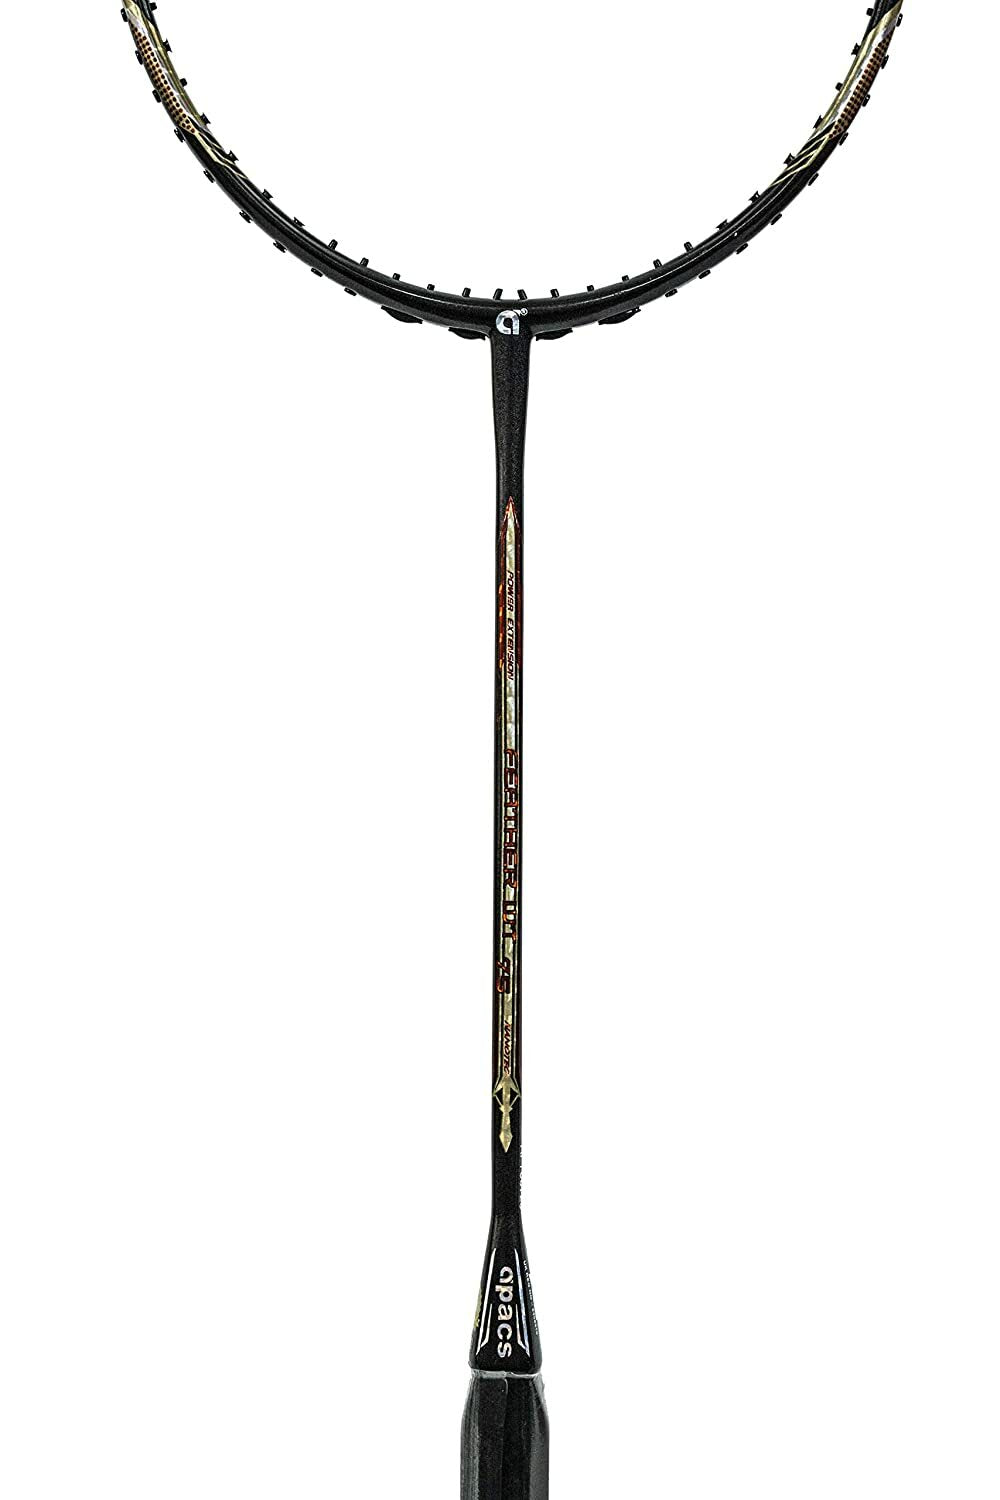 Feather Weight 75 Apacs Badminton Racket 